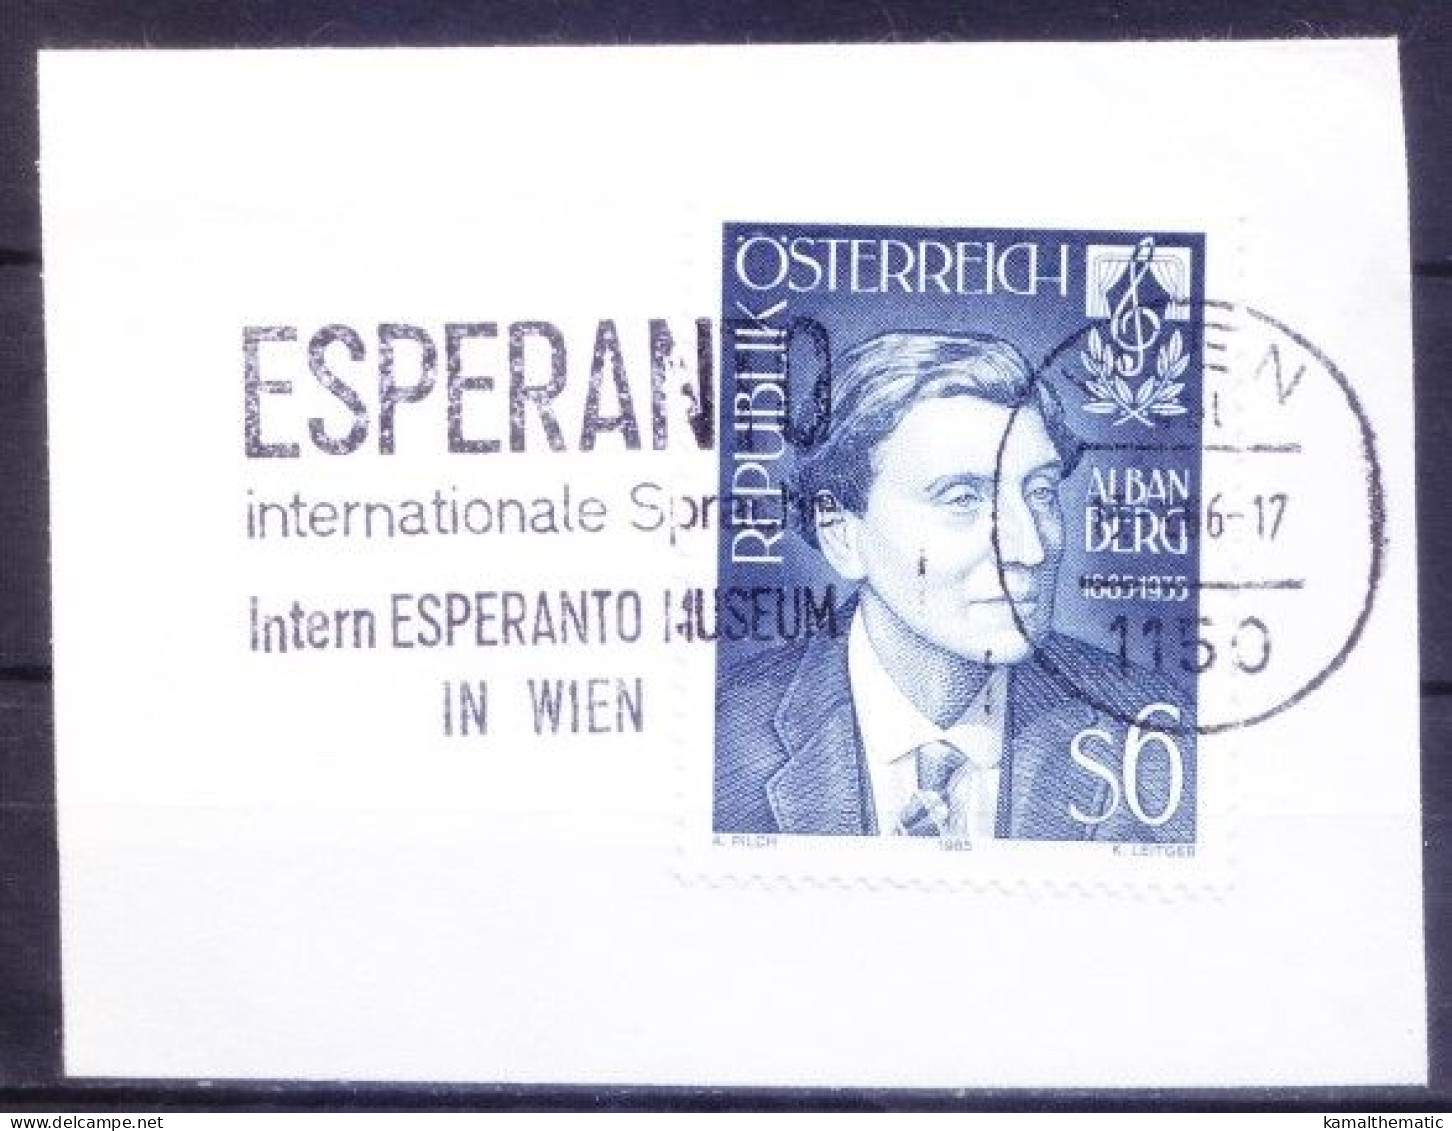 Slogan International Esperanto Museum In Vienna On Austria 1985 Alban Berg Stamp - Museos